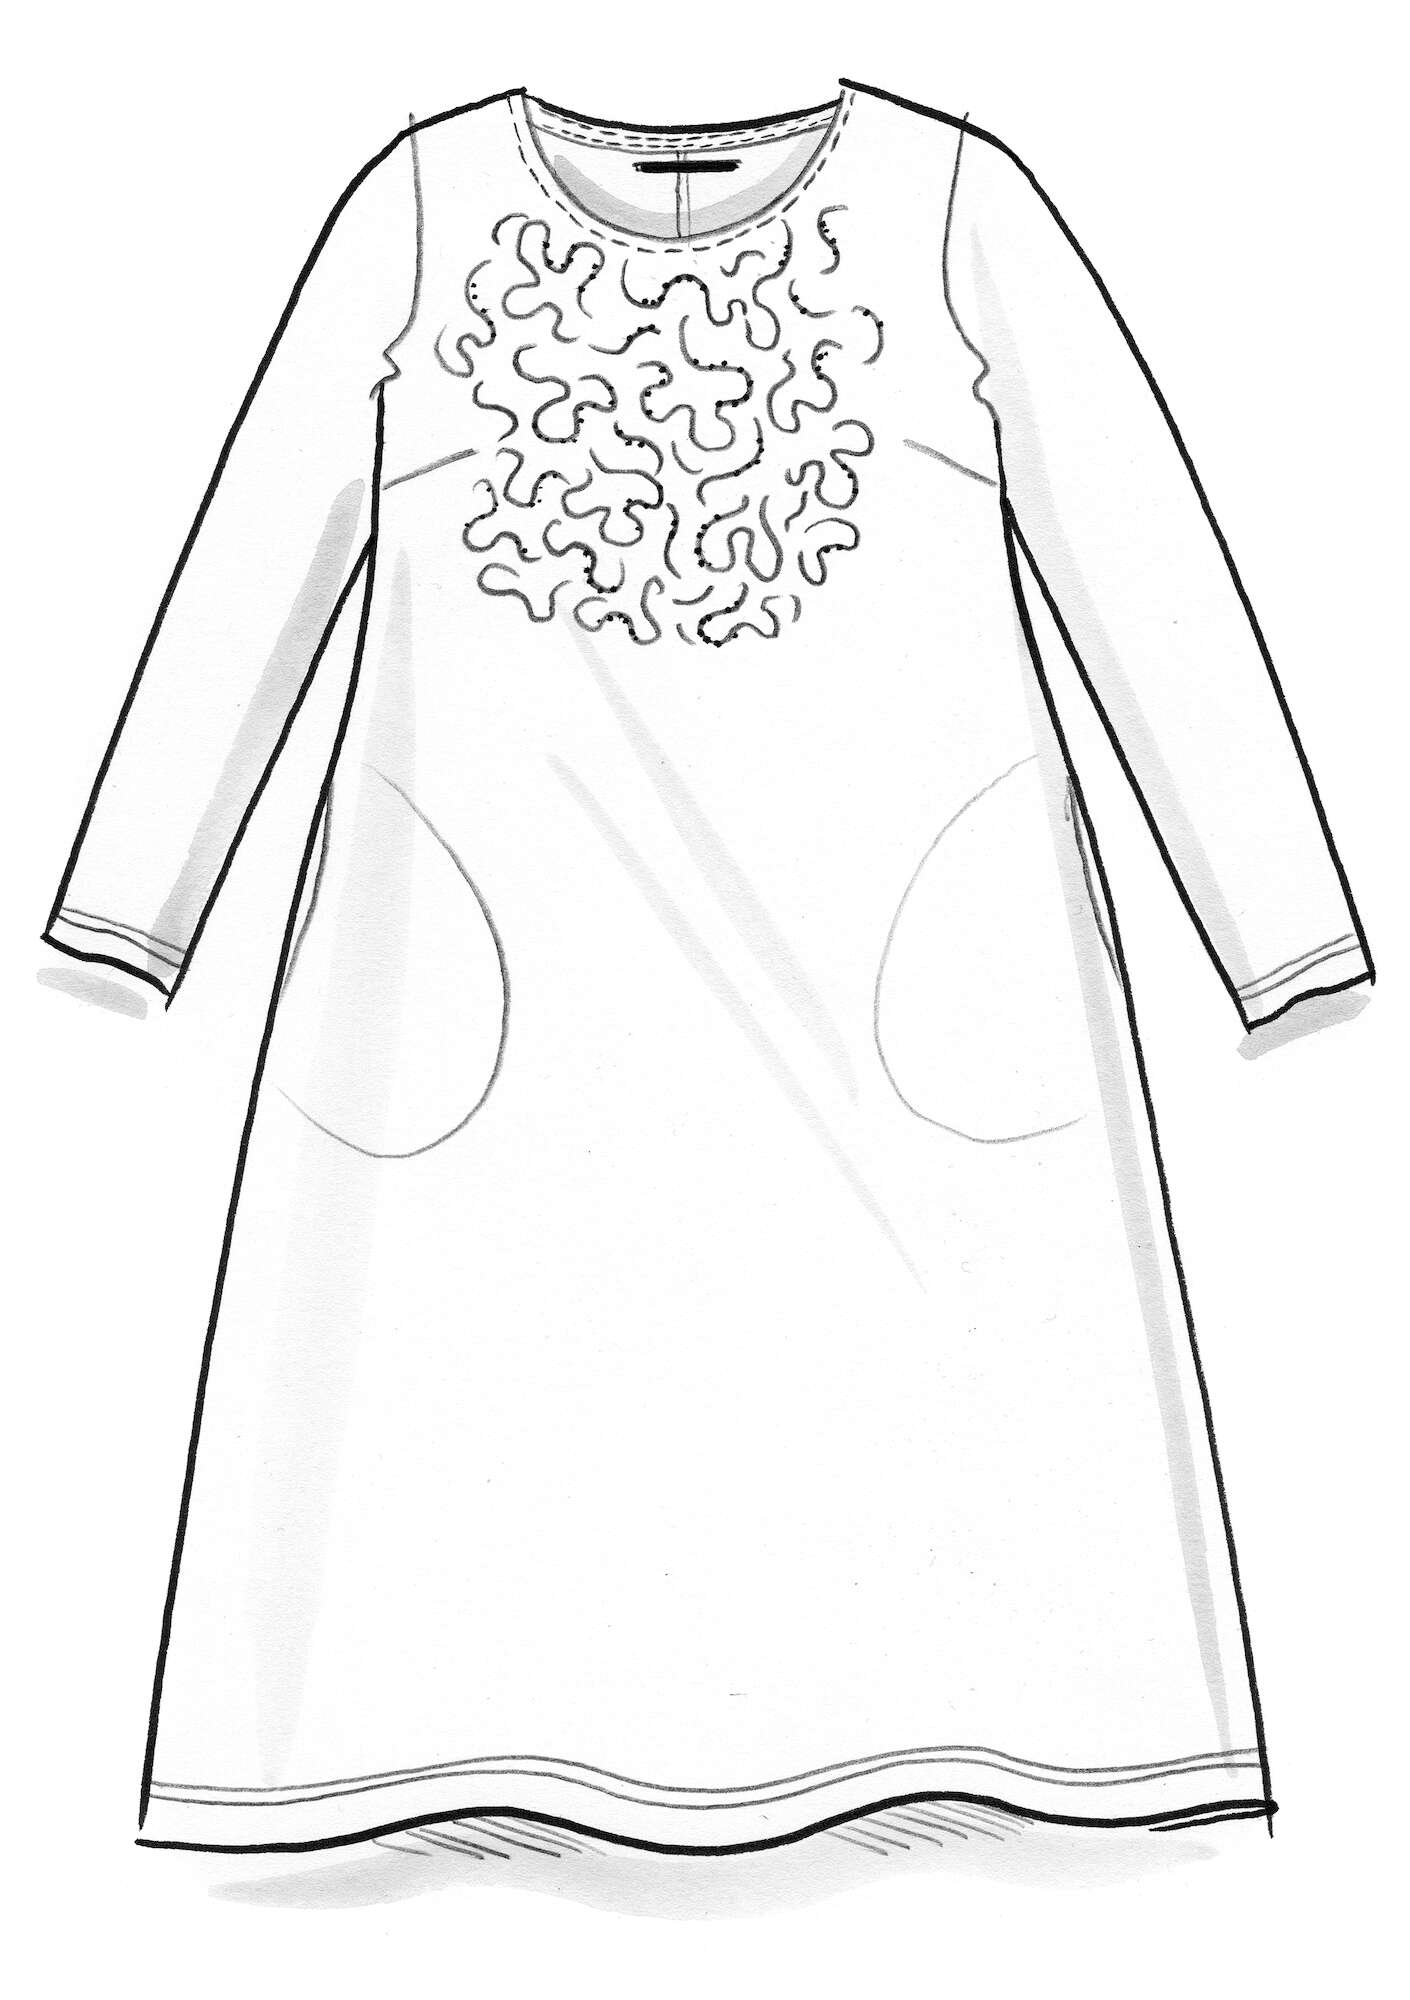 Tricot jurk  Satsuma  van linnen